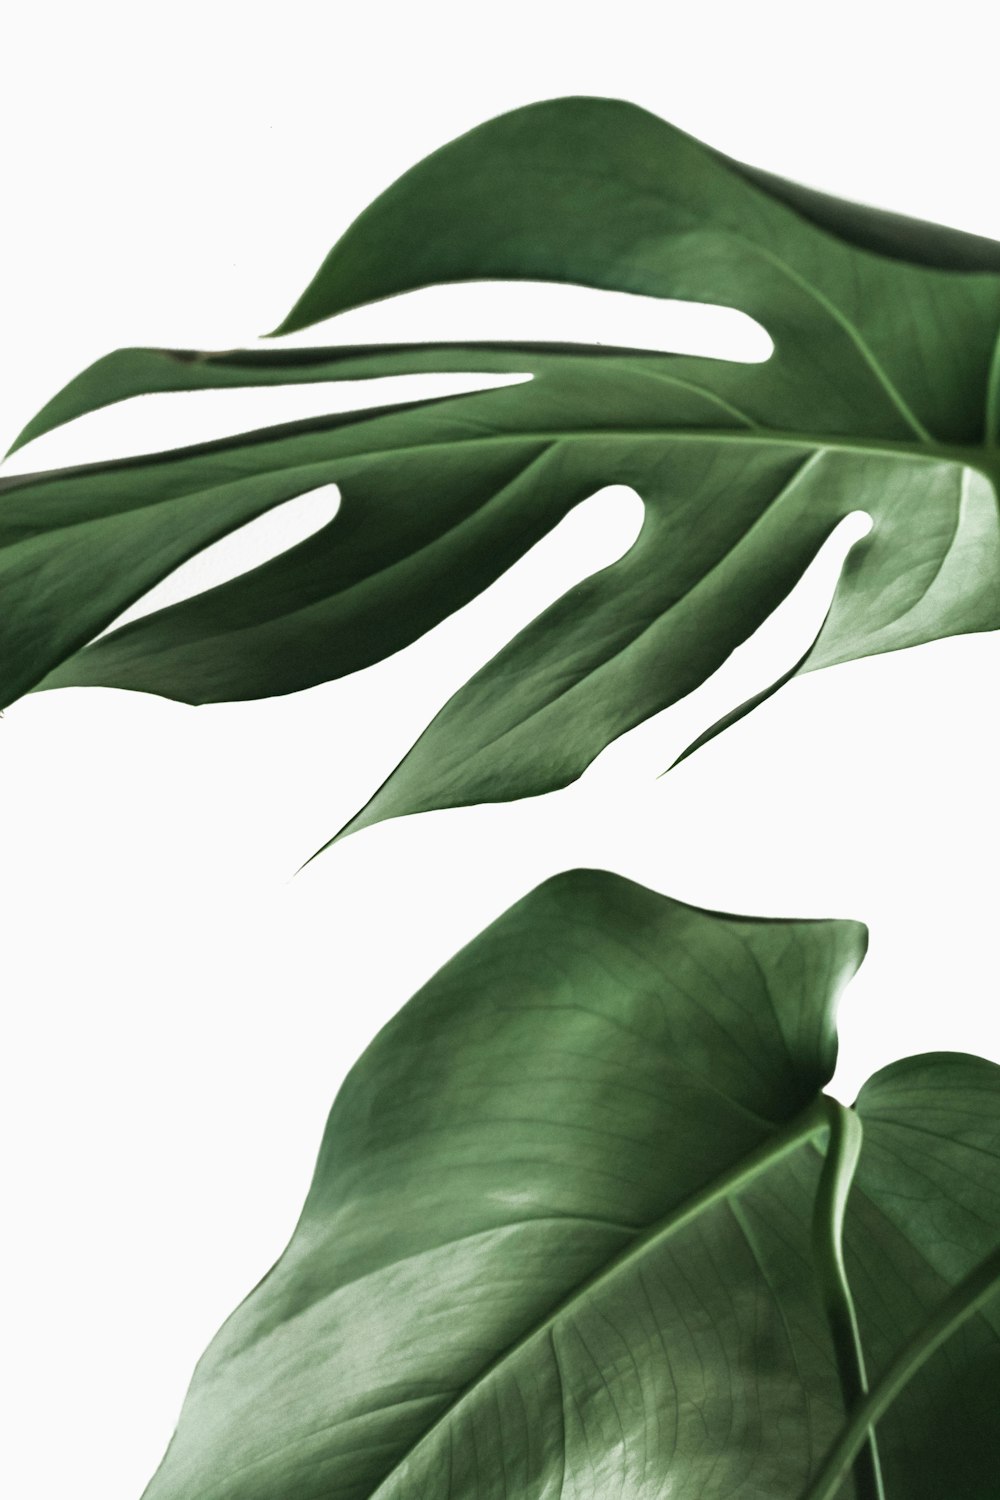 green leaves on white background photo – Free Plant Image on Unsplash